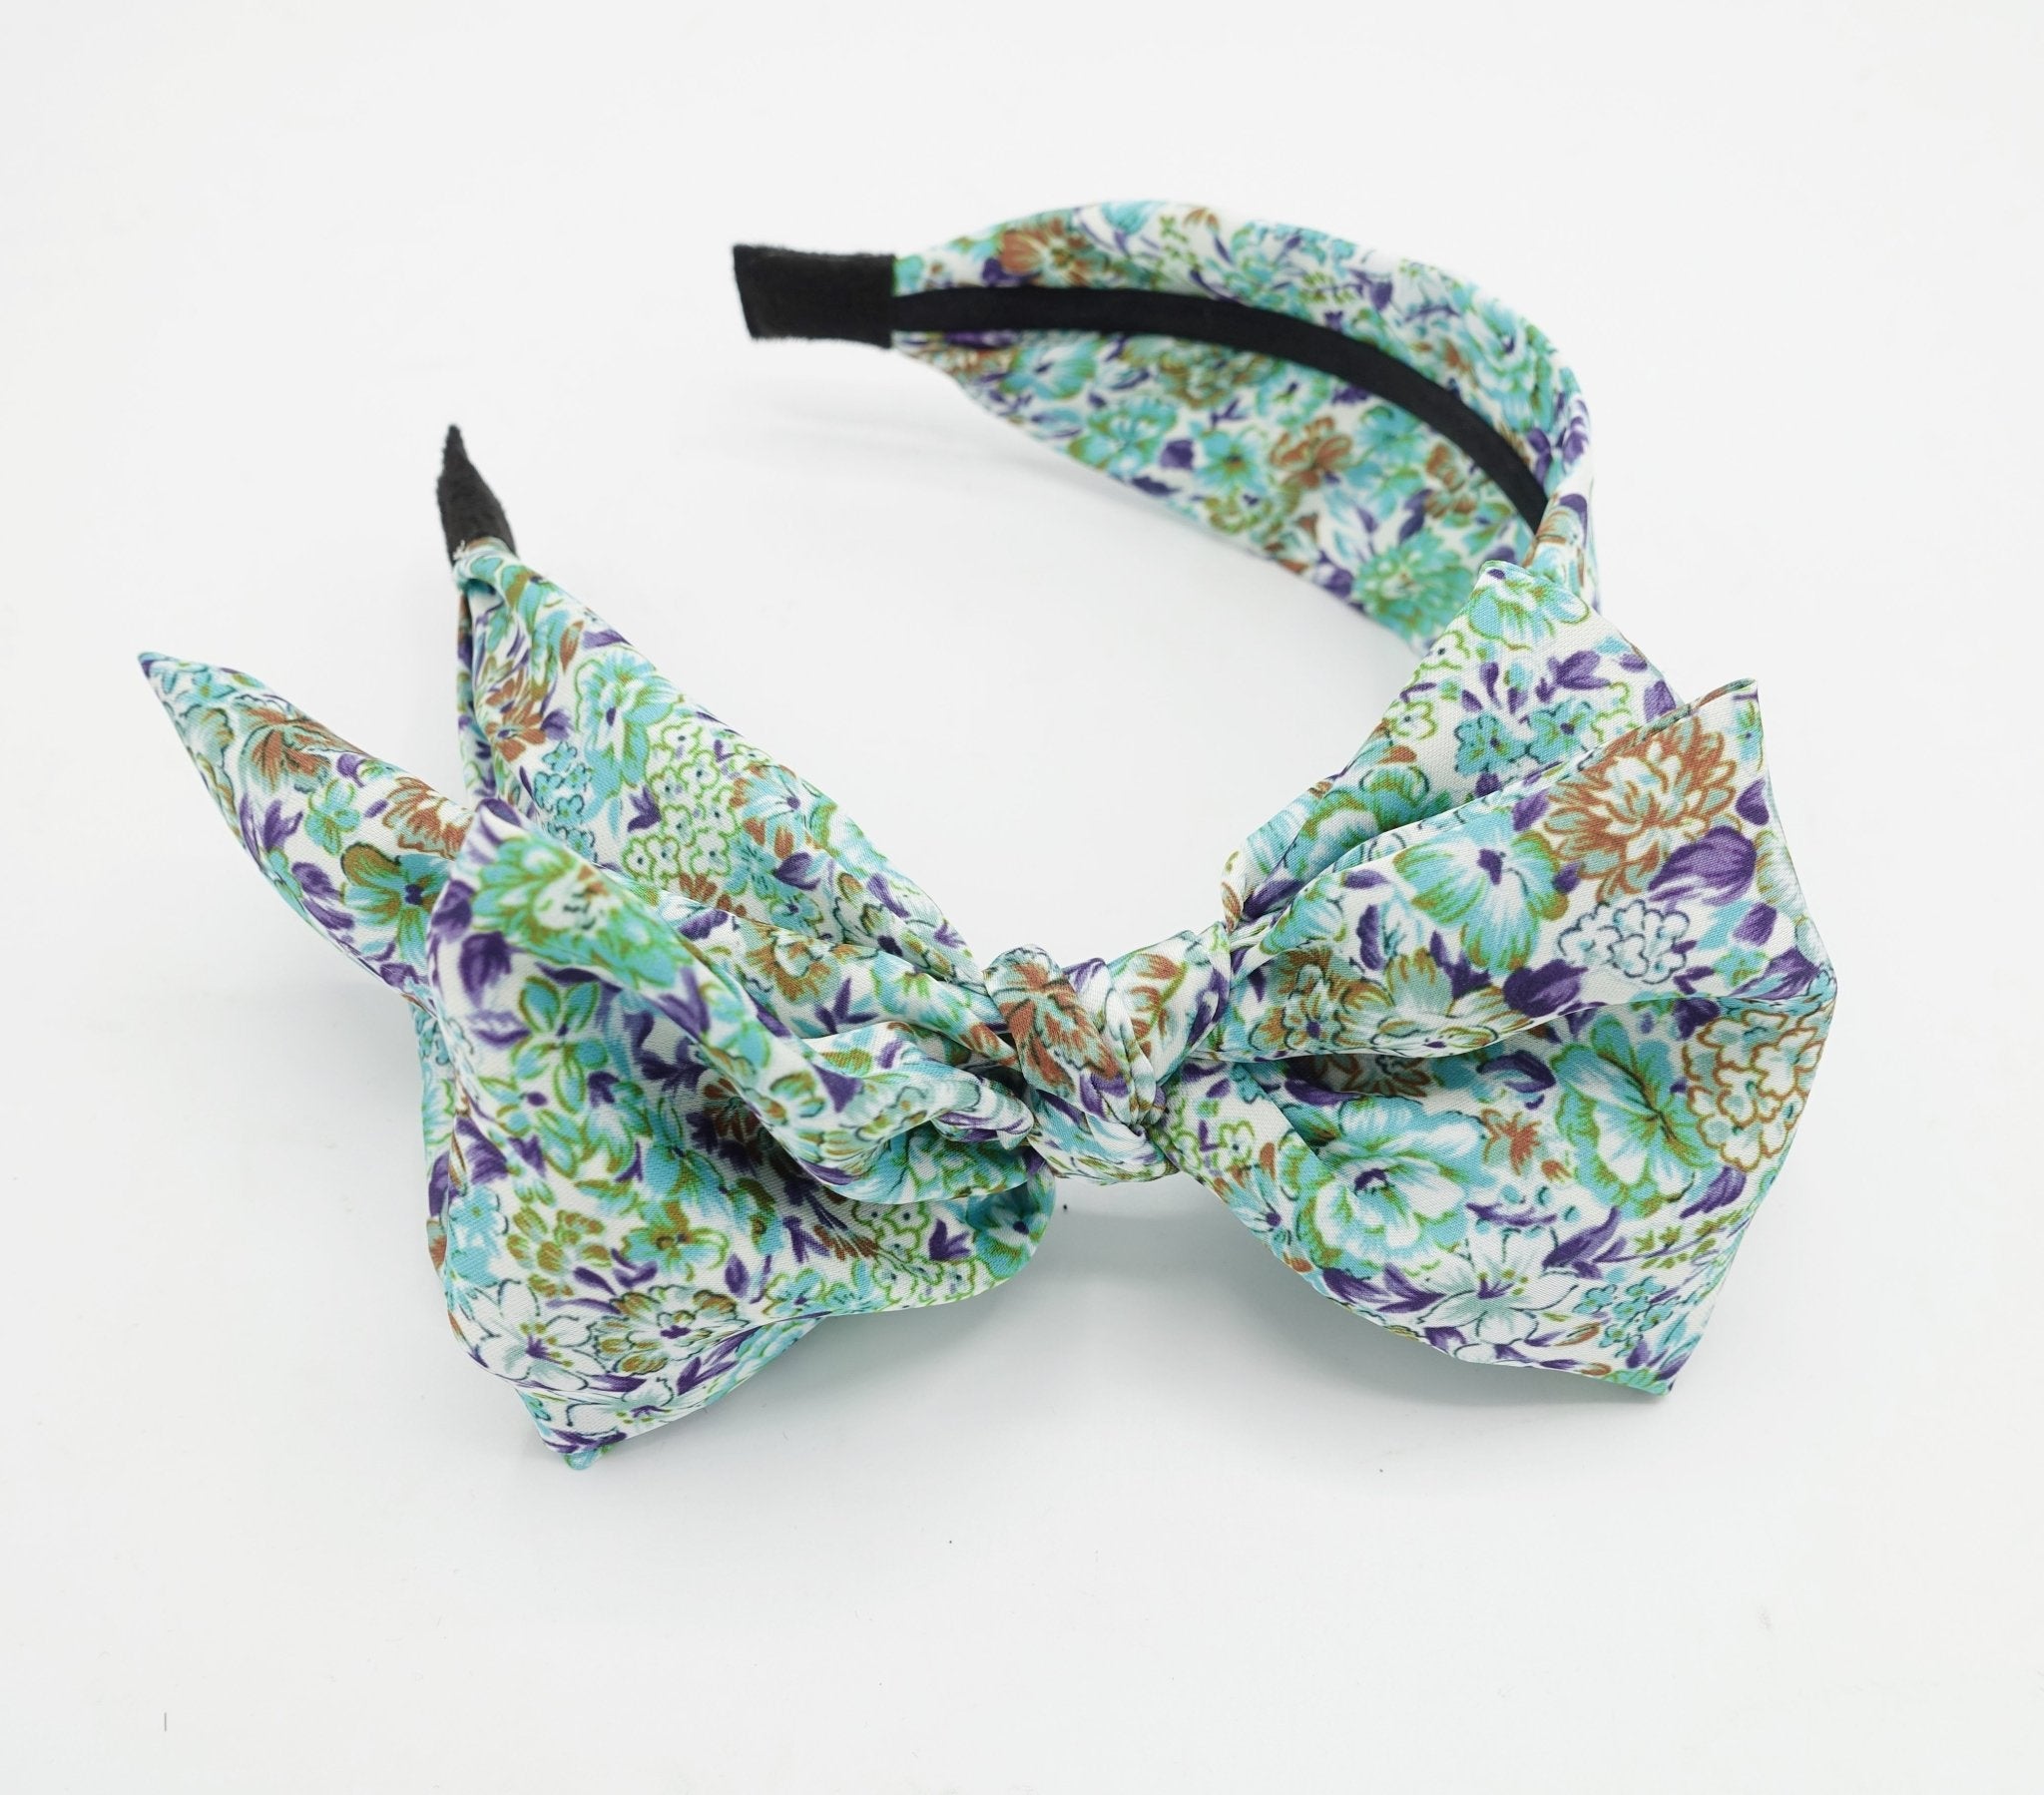 veryshine.com Headband floral bow knot headband flower print hairband woman hair accessory